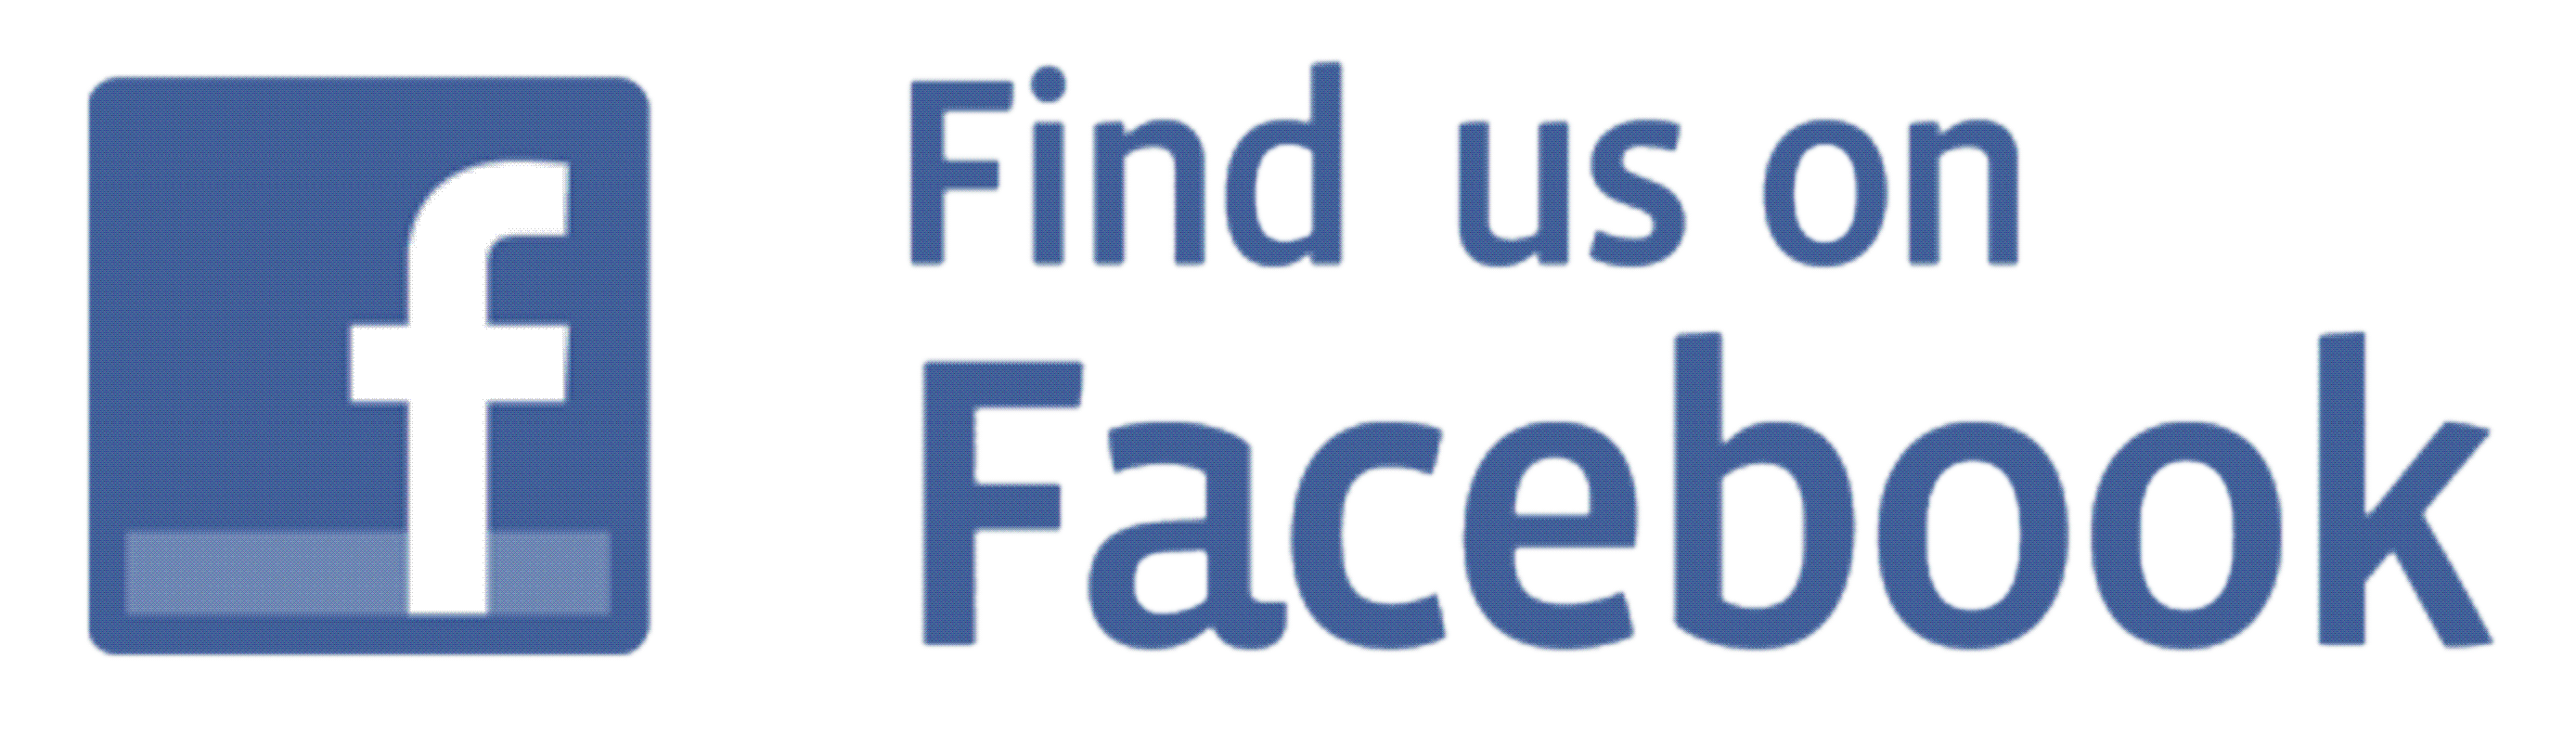 facebook-logo-clipart-png-8